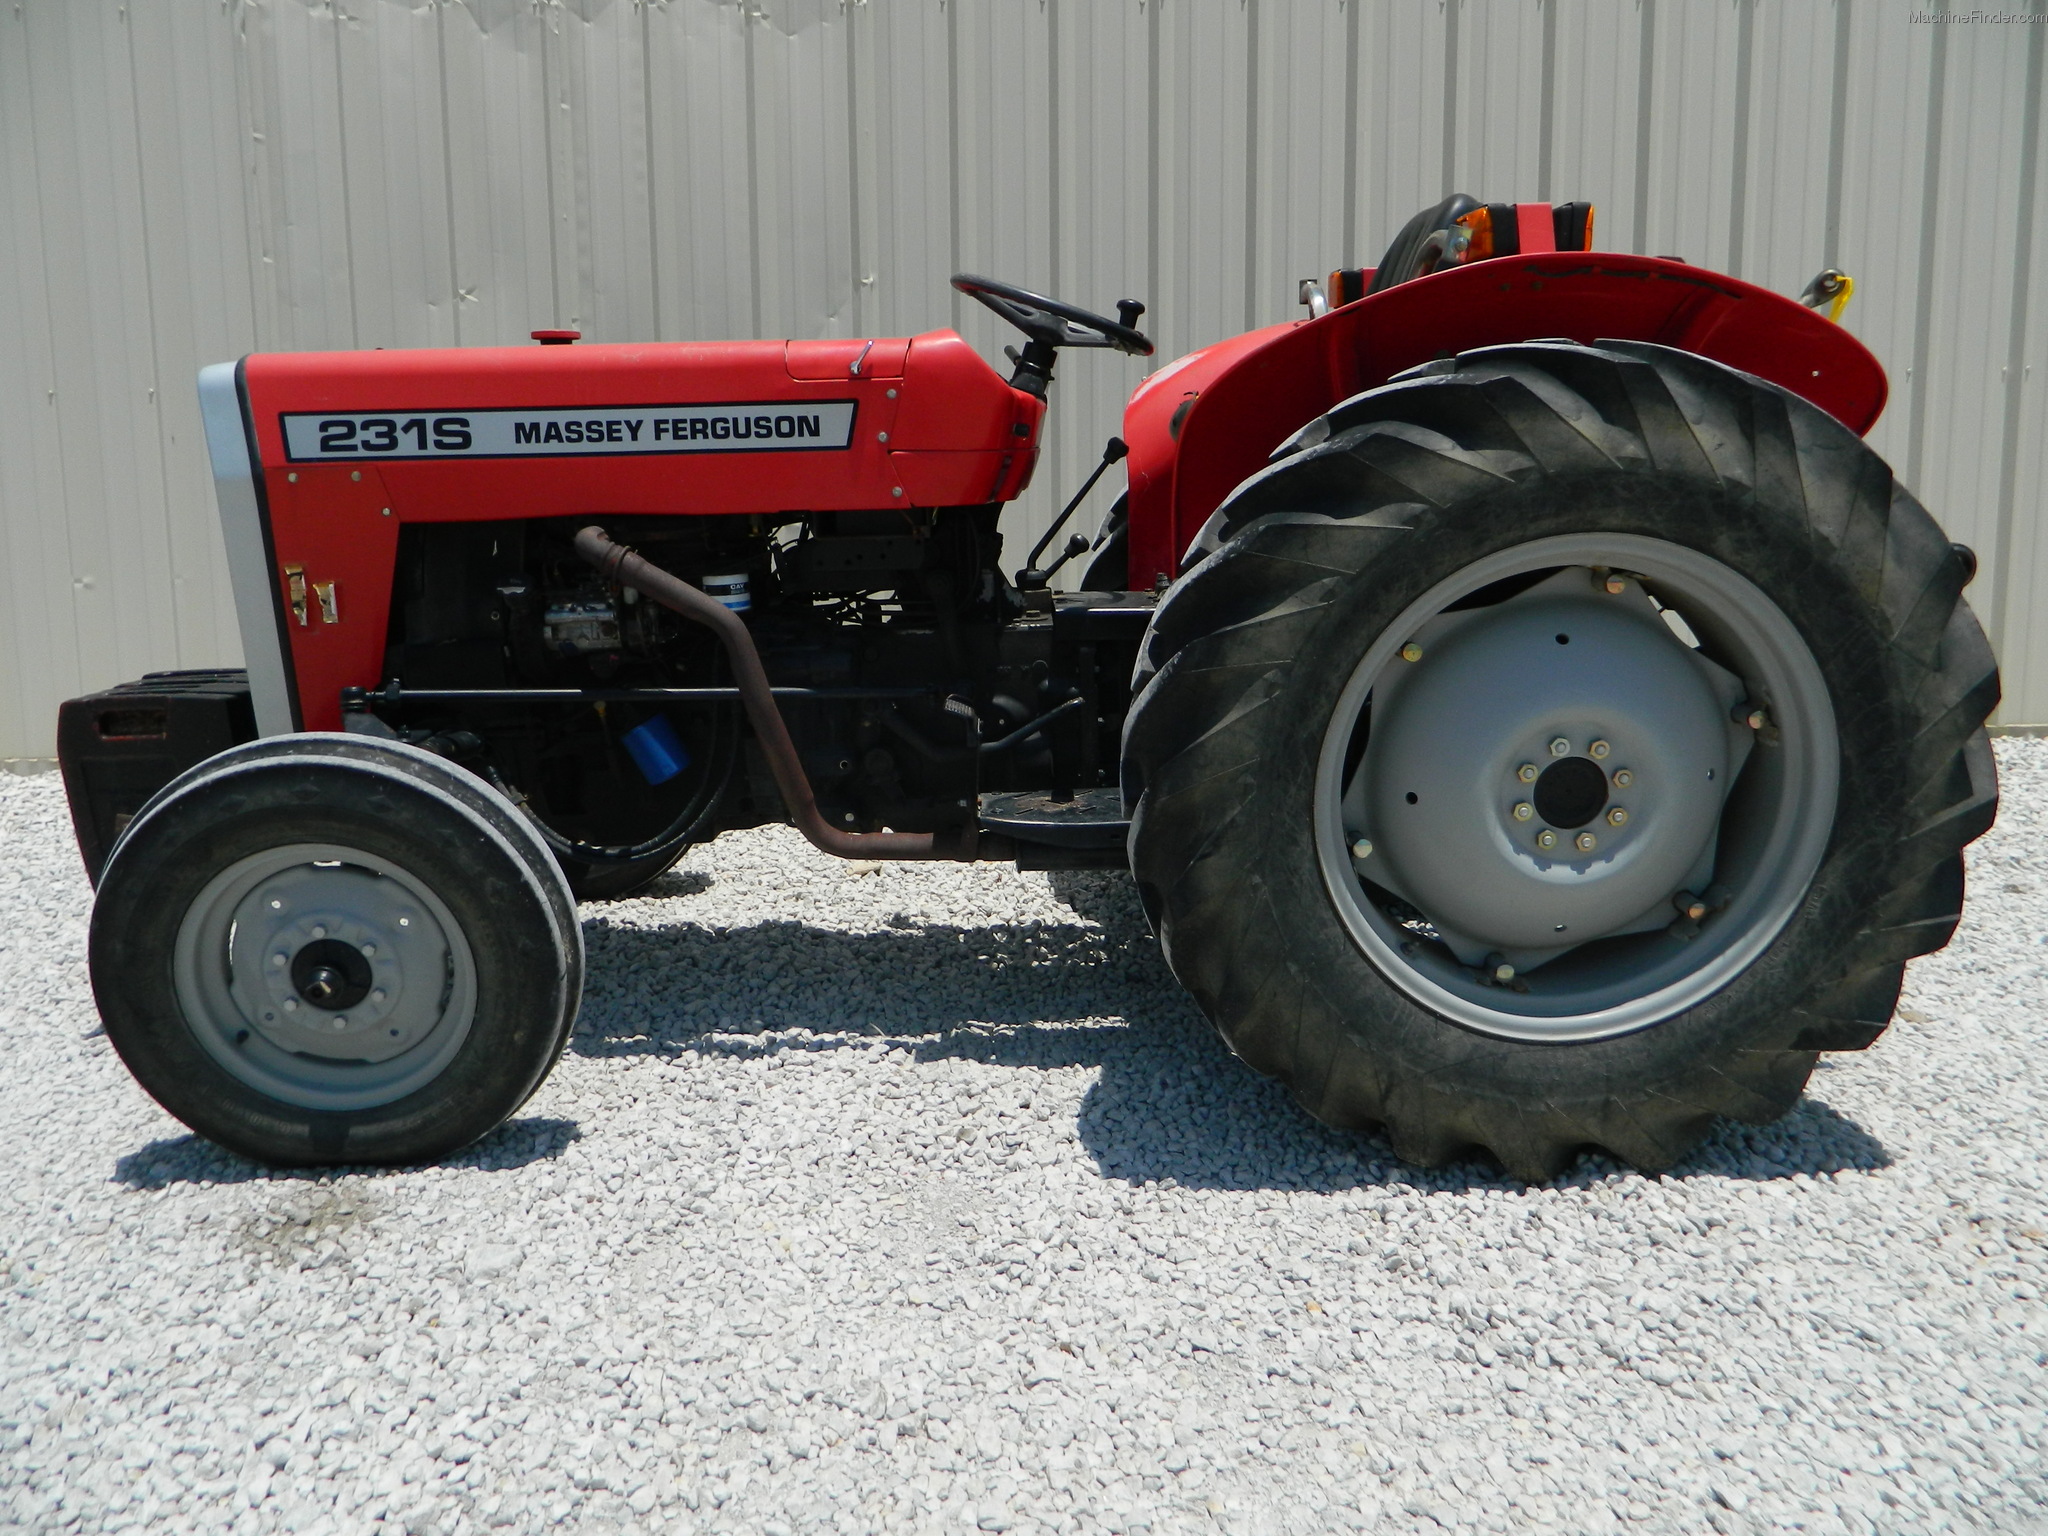 1999 Massey Ferguson 231s Tractors Utility 40 100hp John Deere Machinefinder 8635